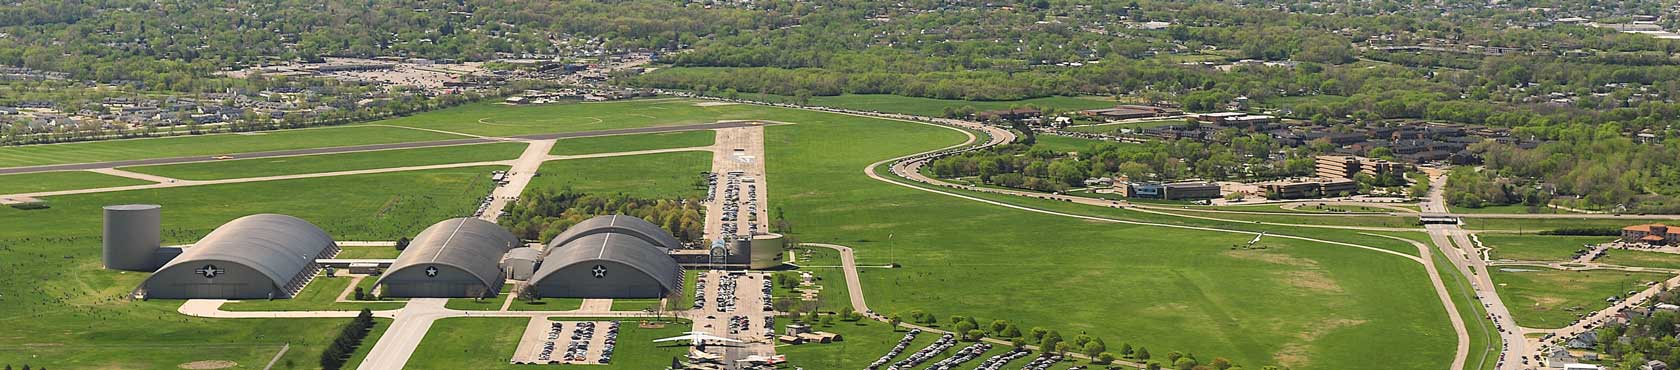 Aerial shot of Wright Patt Air Force Base